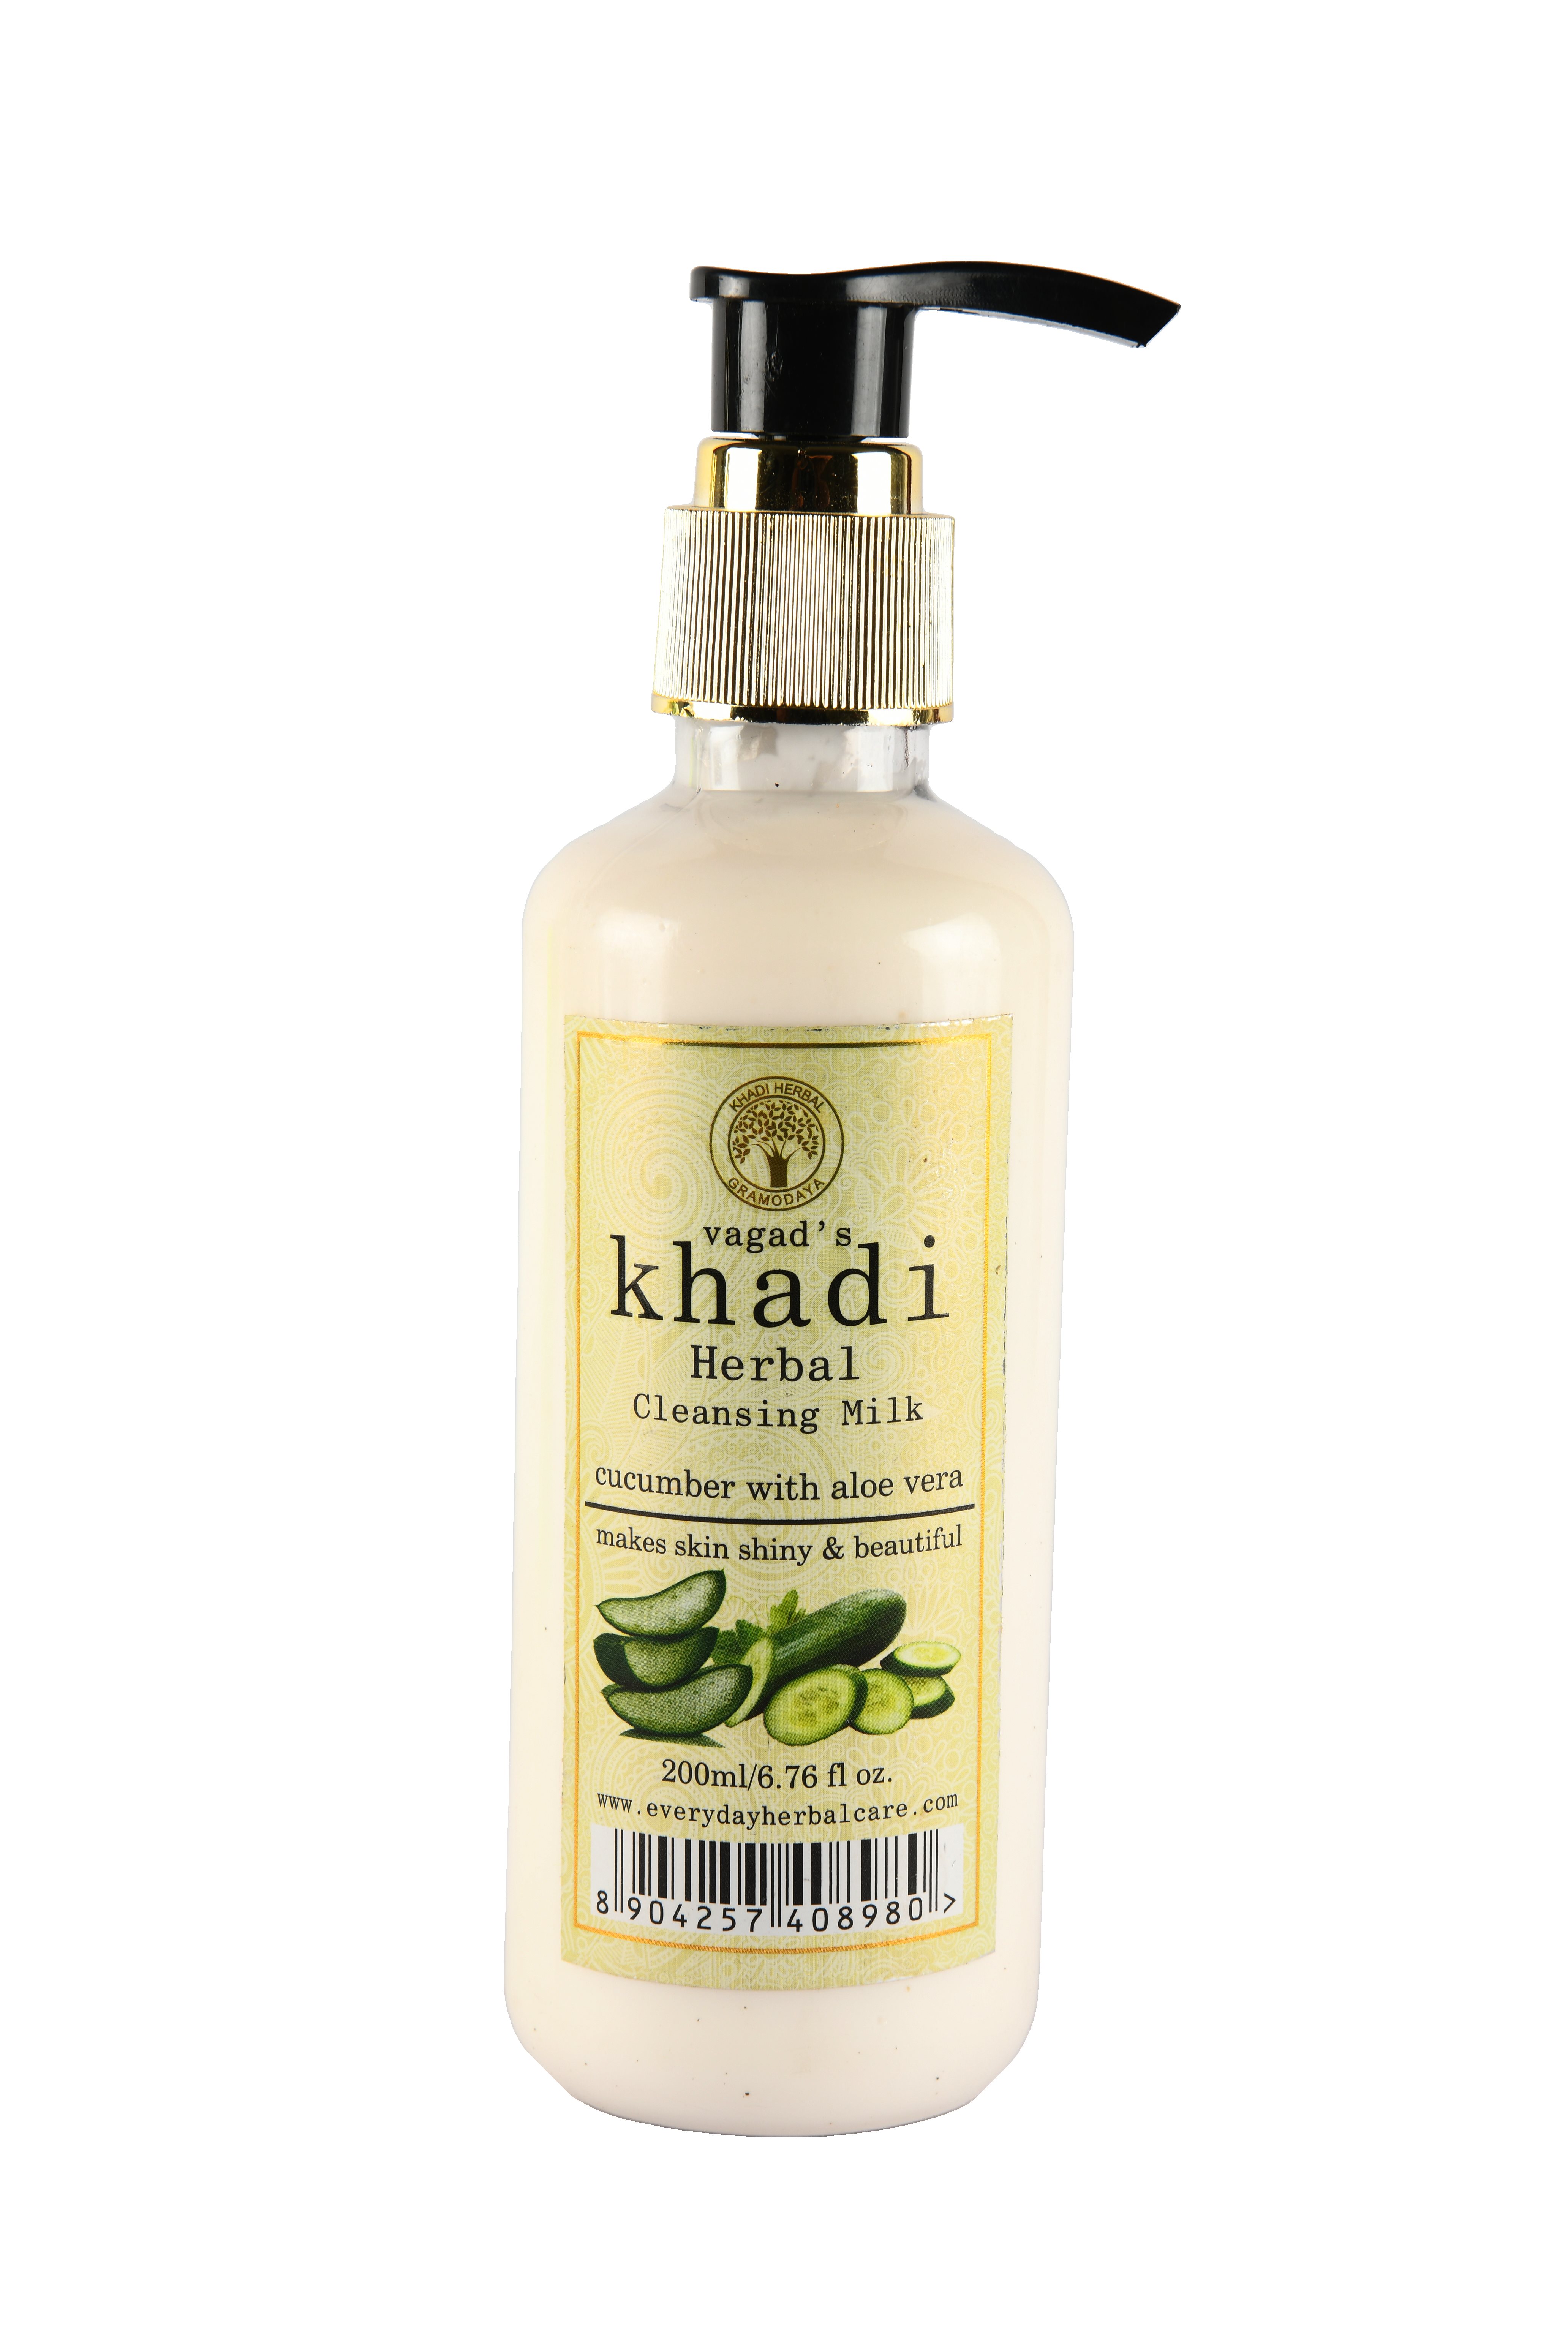 Buy Vagad's Khadi Cucumber With Aloevera Cleansing Milk at Best Price Online